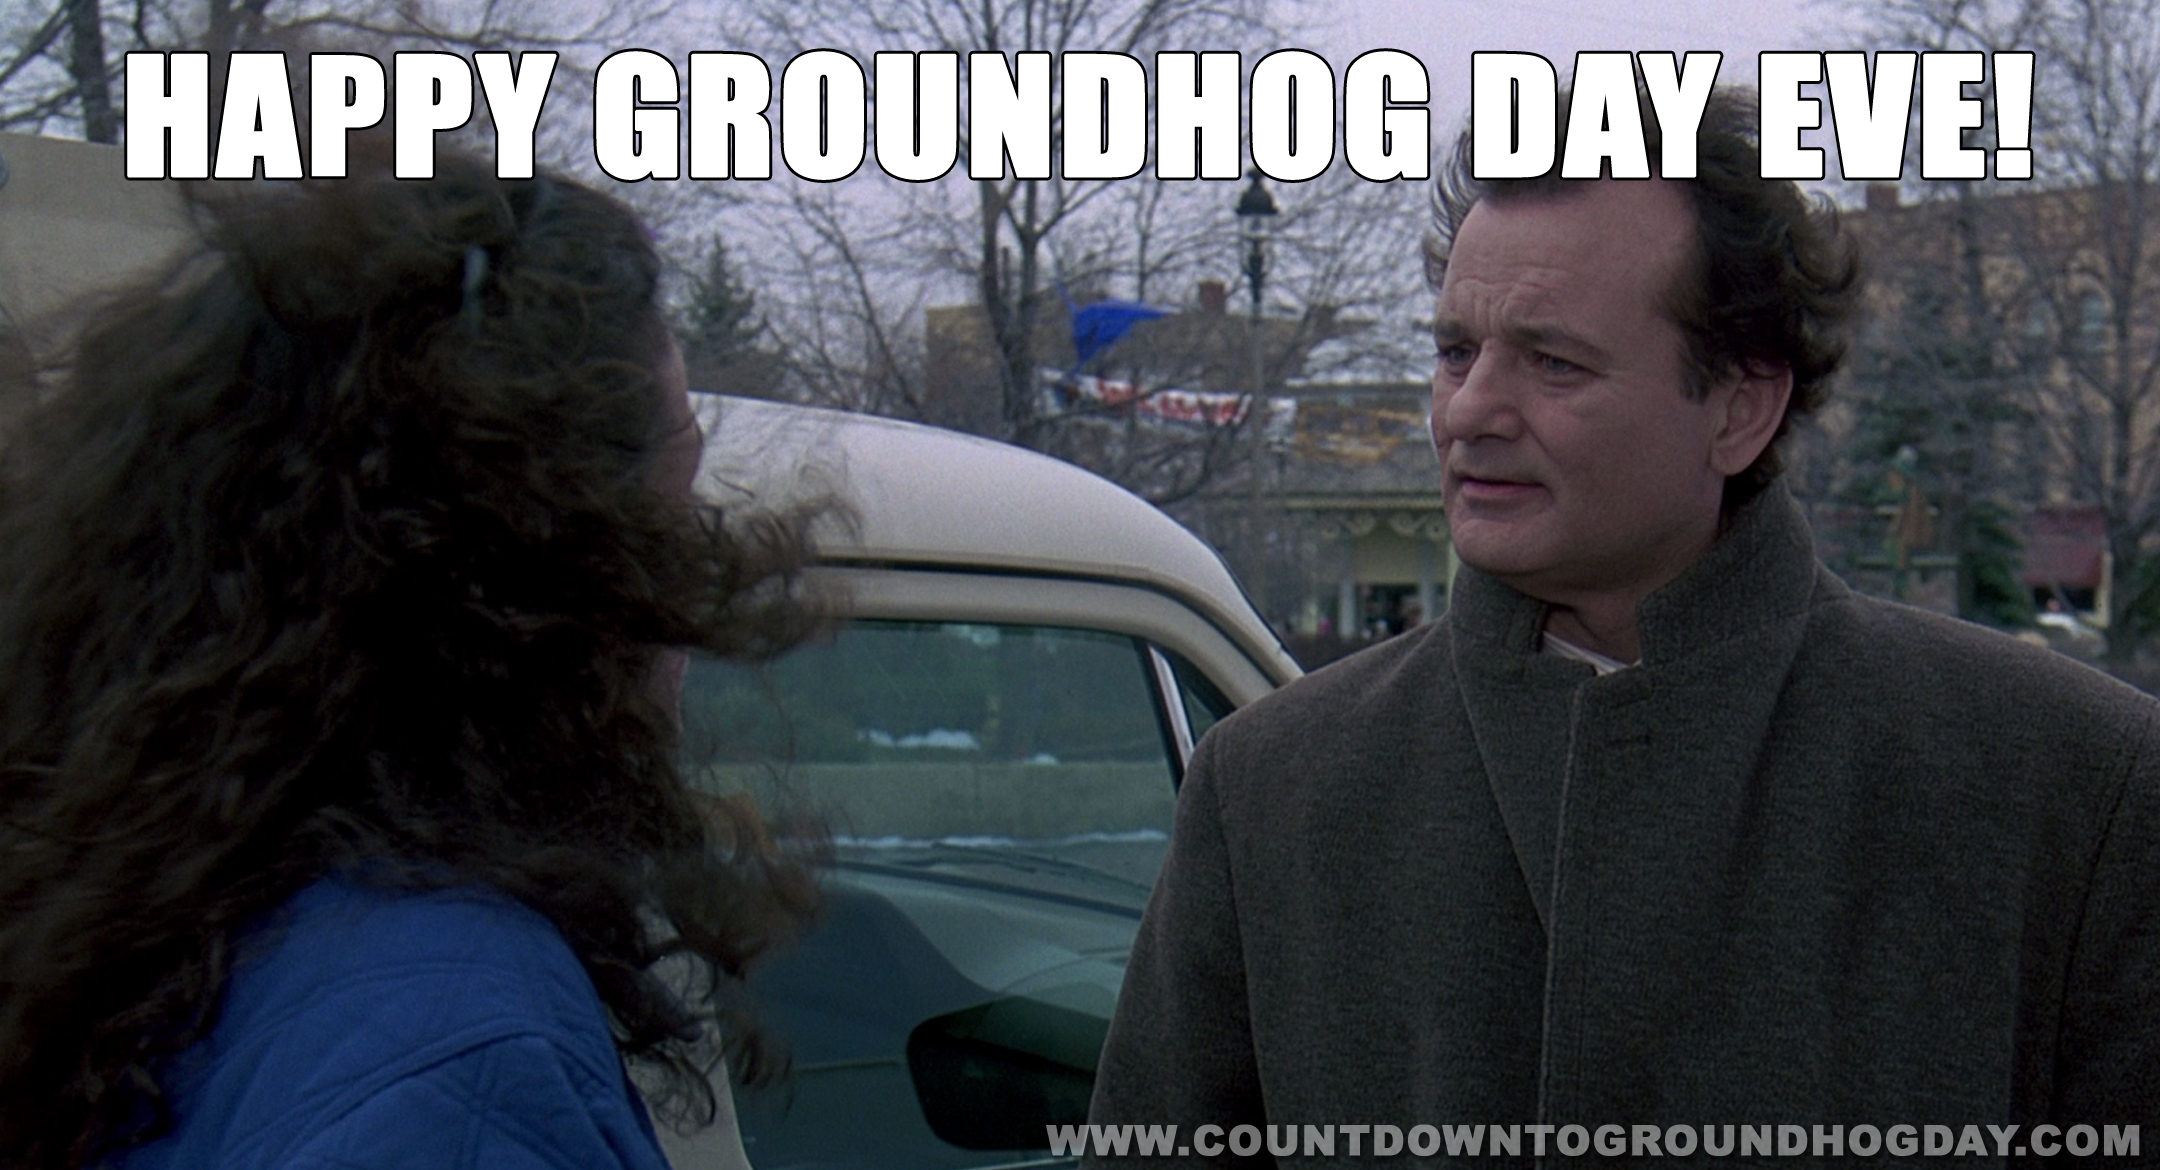 Happy Groundhog Day Eve!